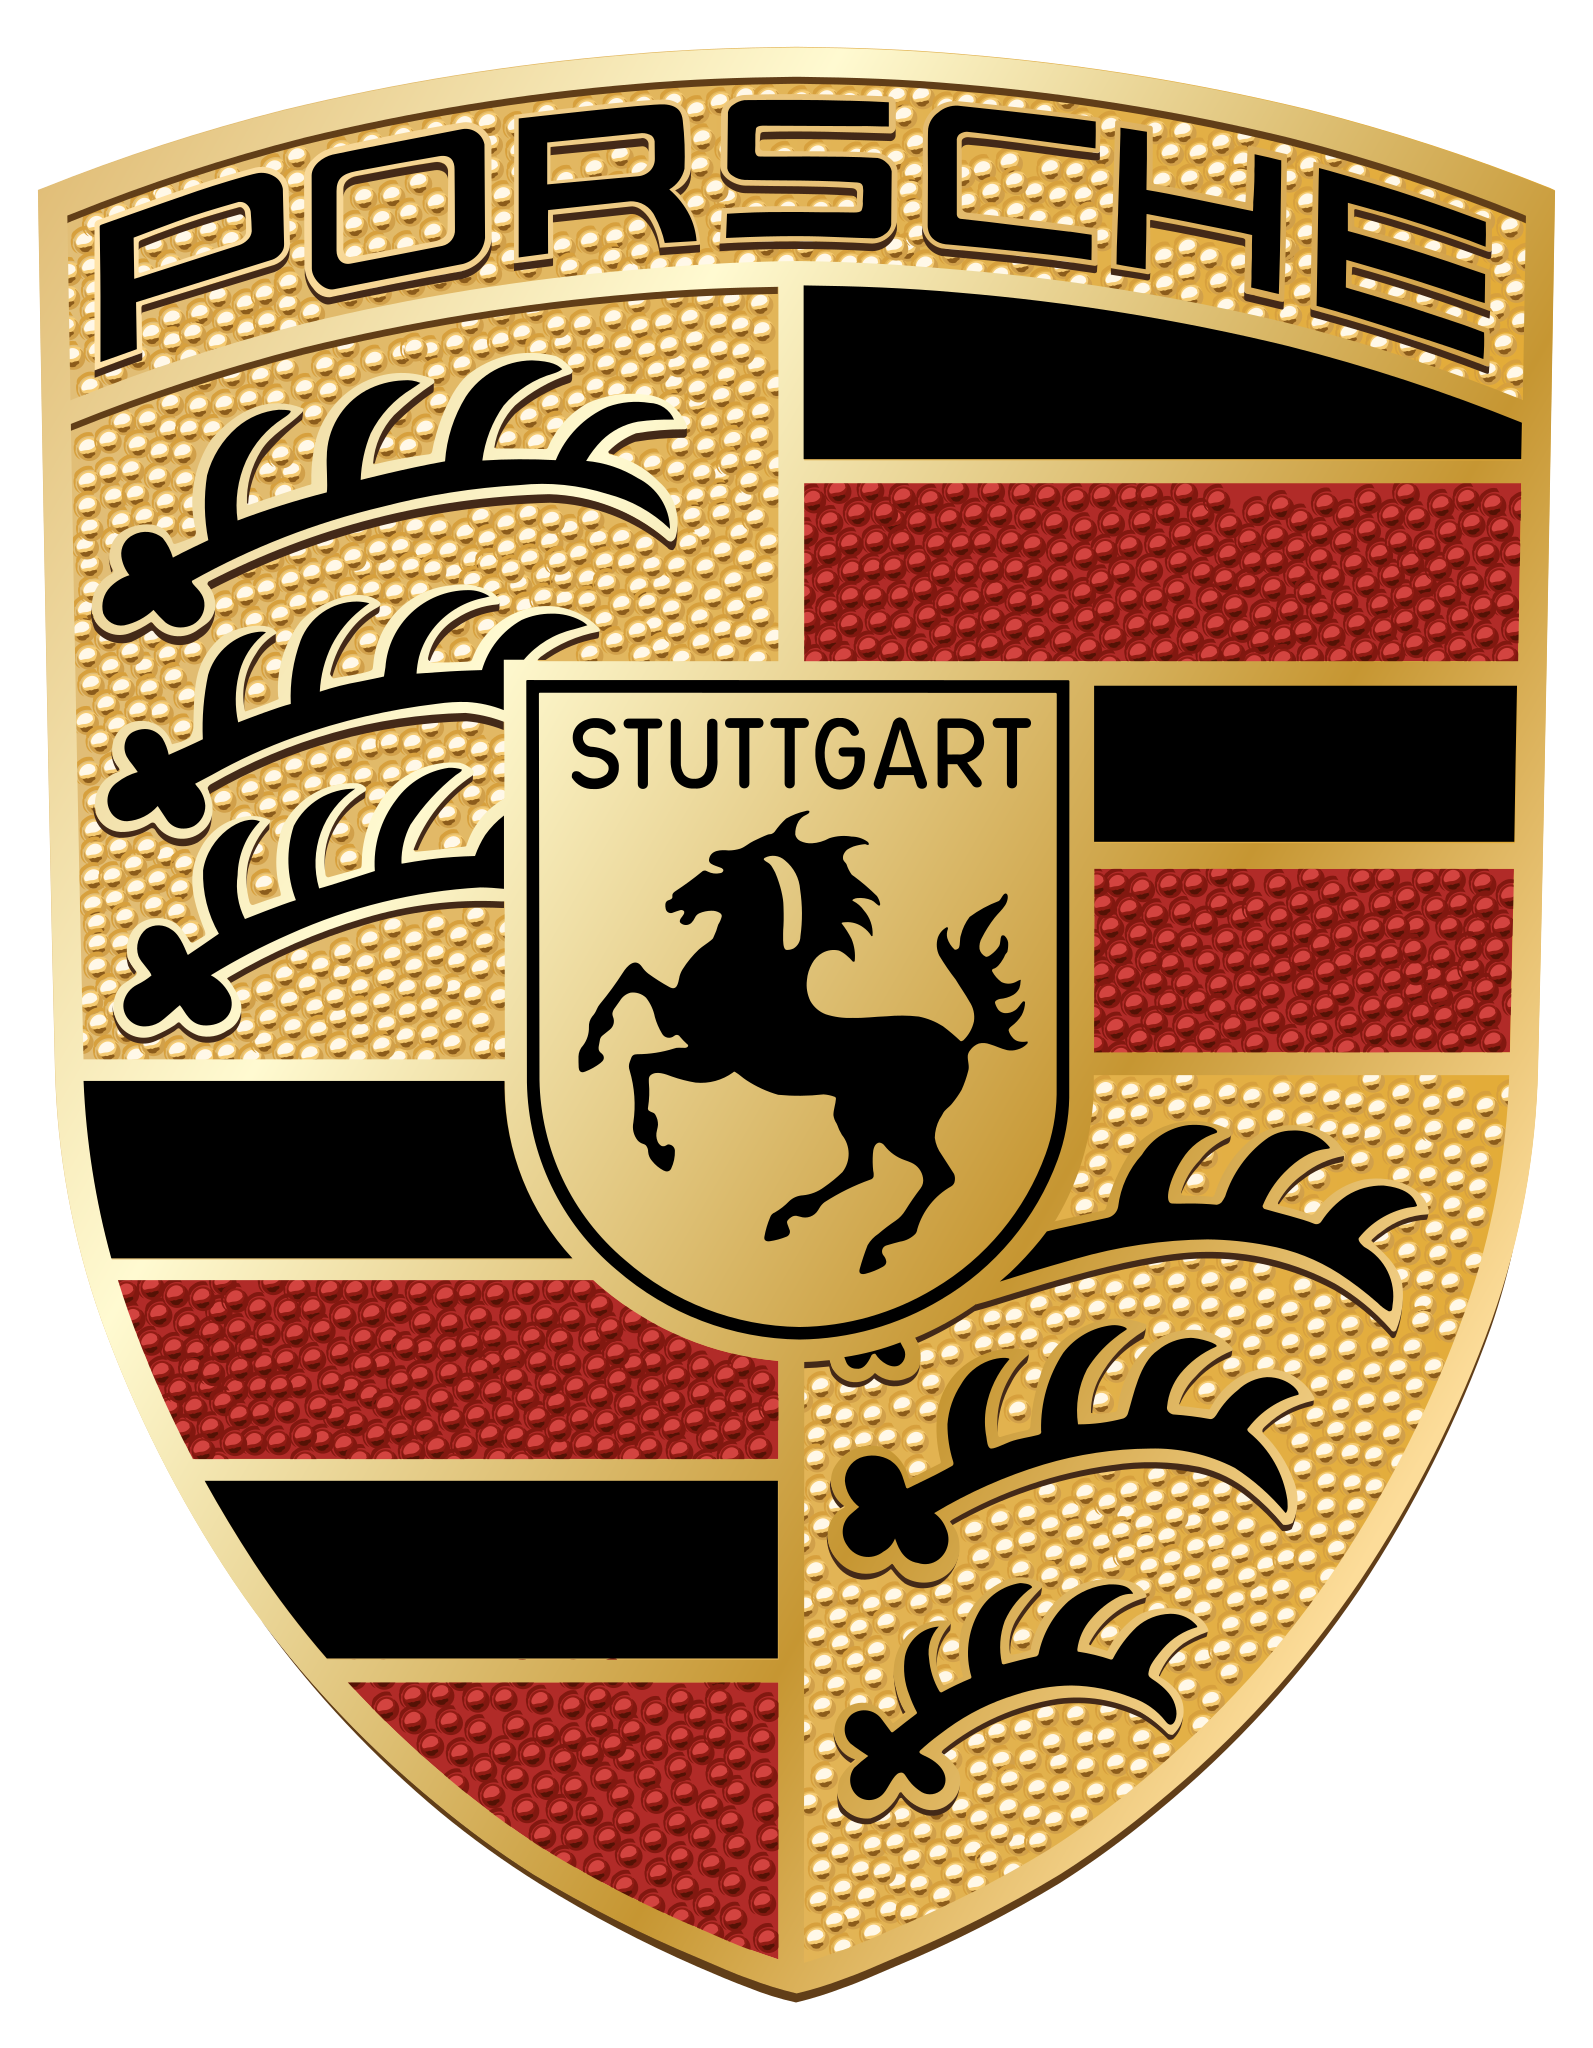 The Porsche brand.